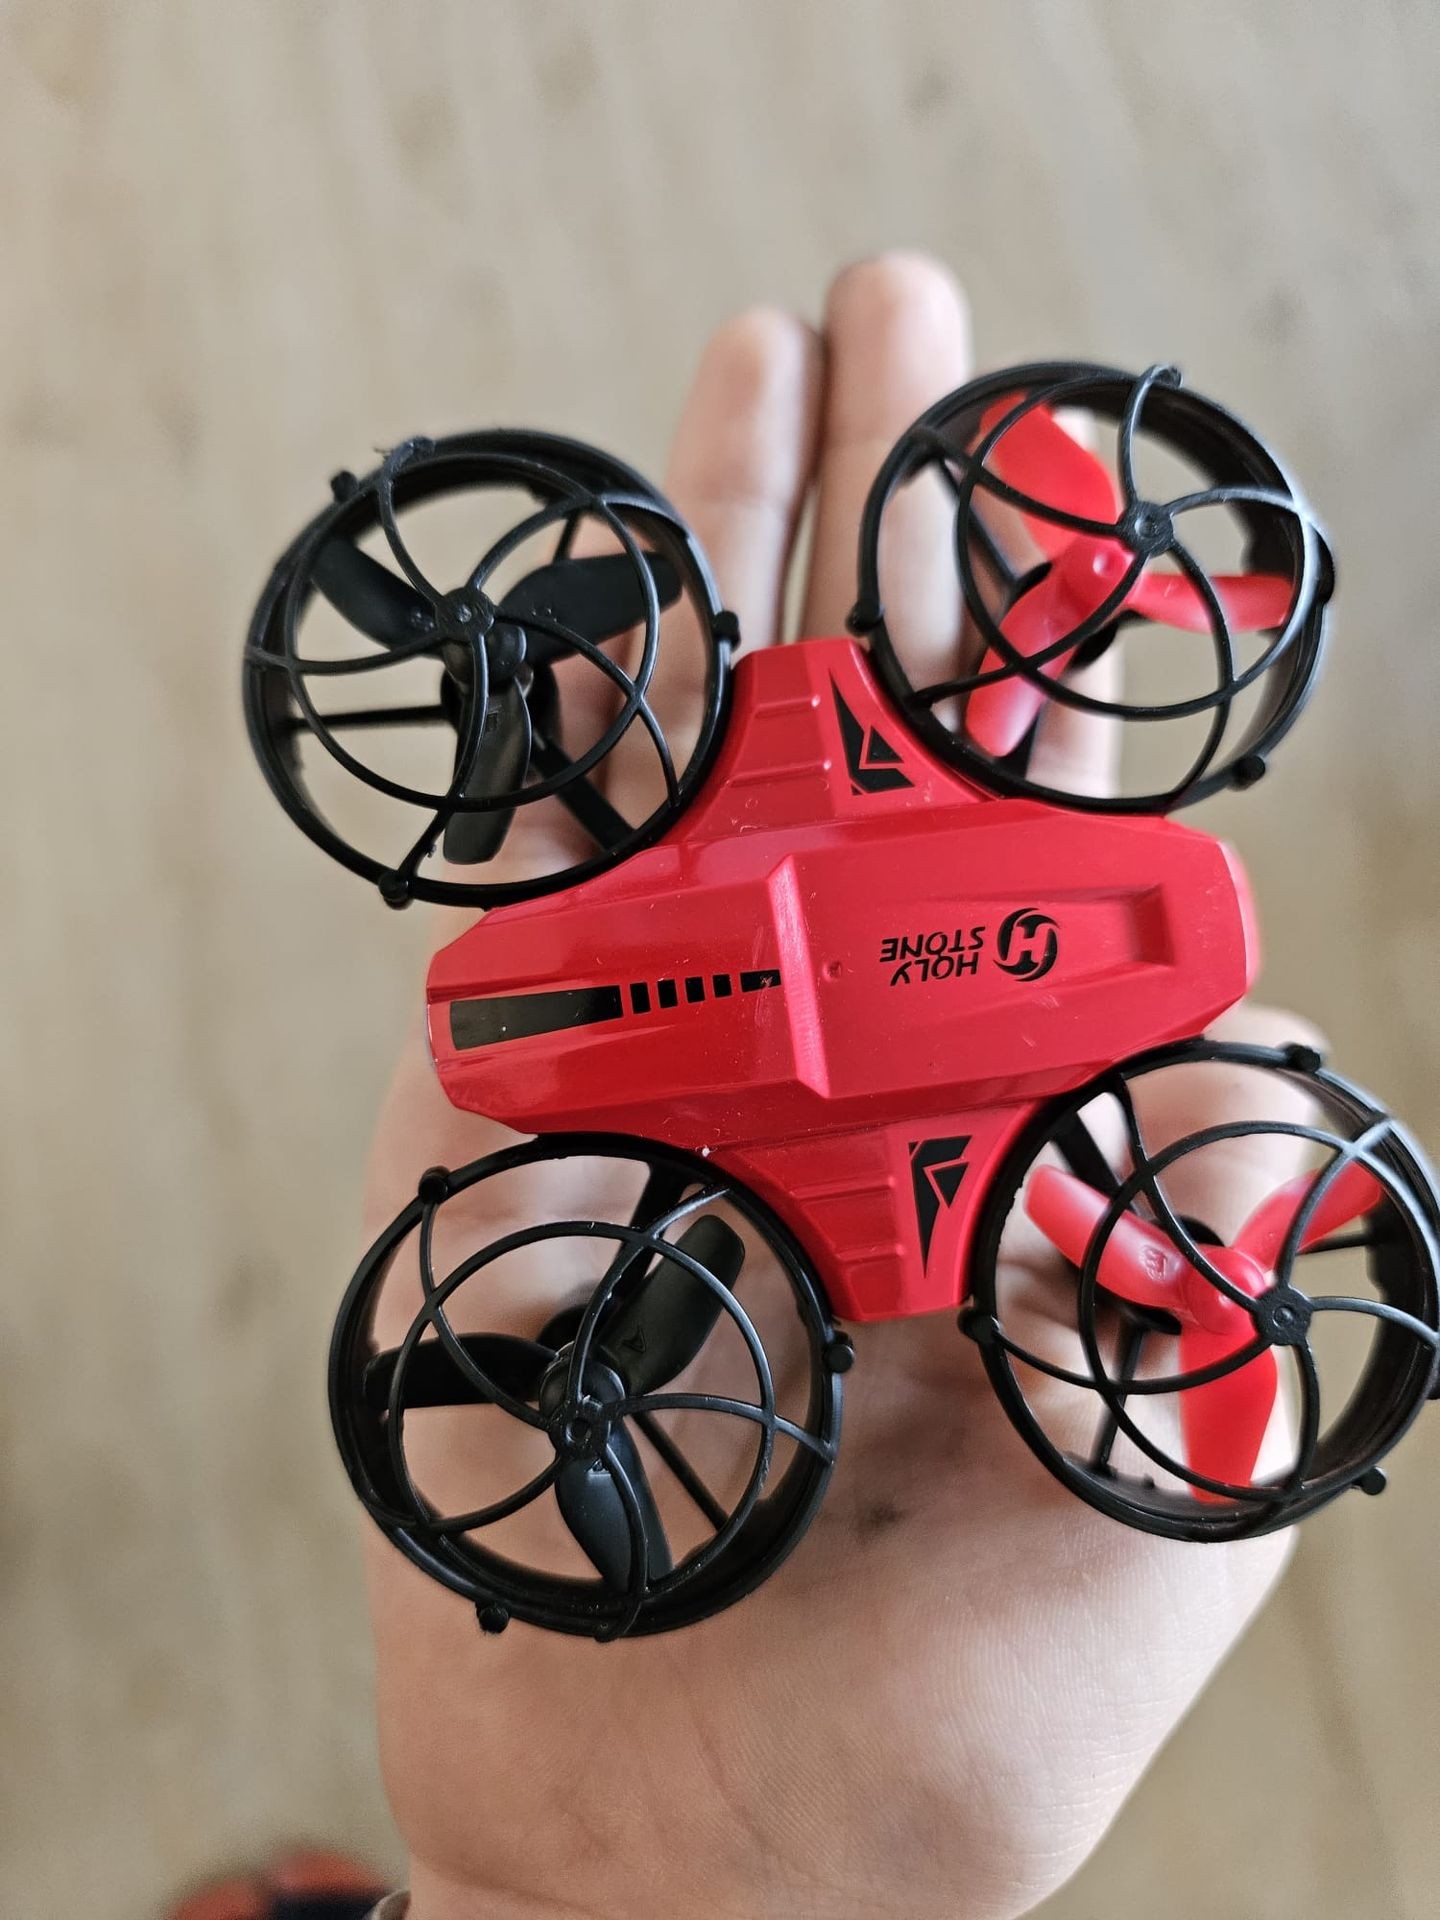 Test und Review der Holy Stone HS420 Mini Drohne